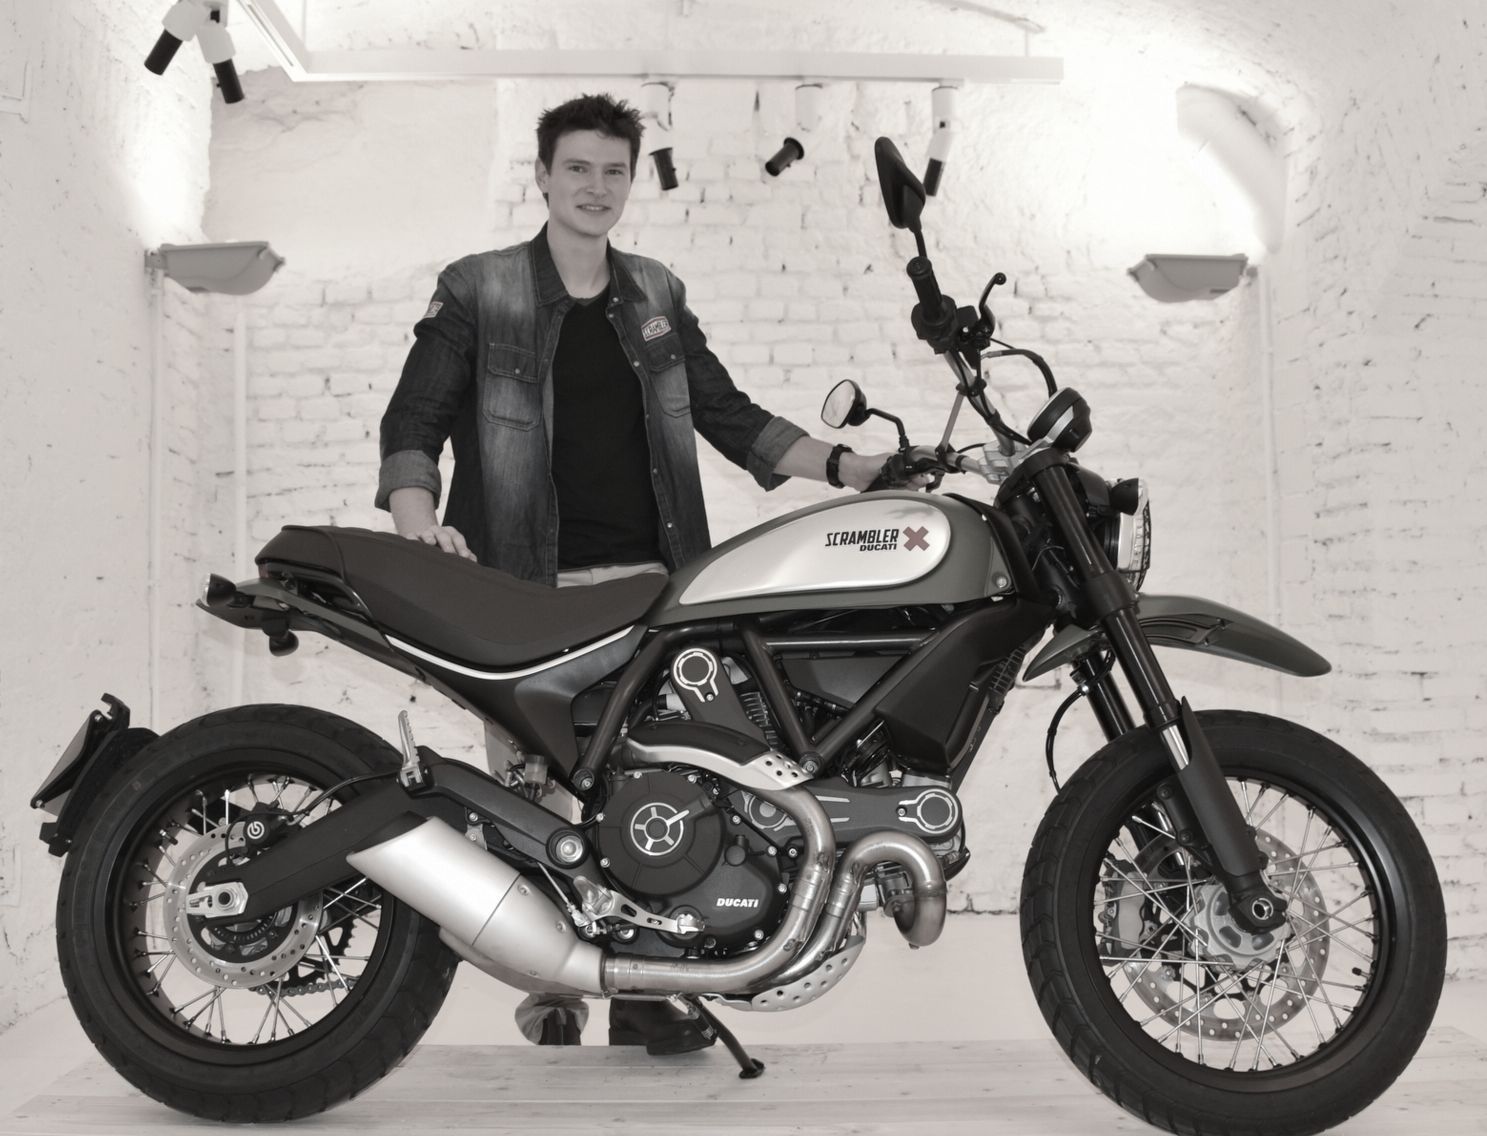 Julien Clement, 26 is the designer who drew the Ducati Scrambler